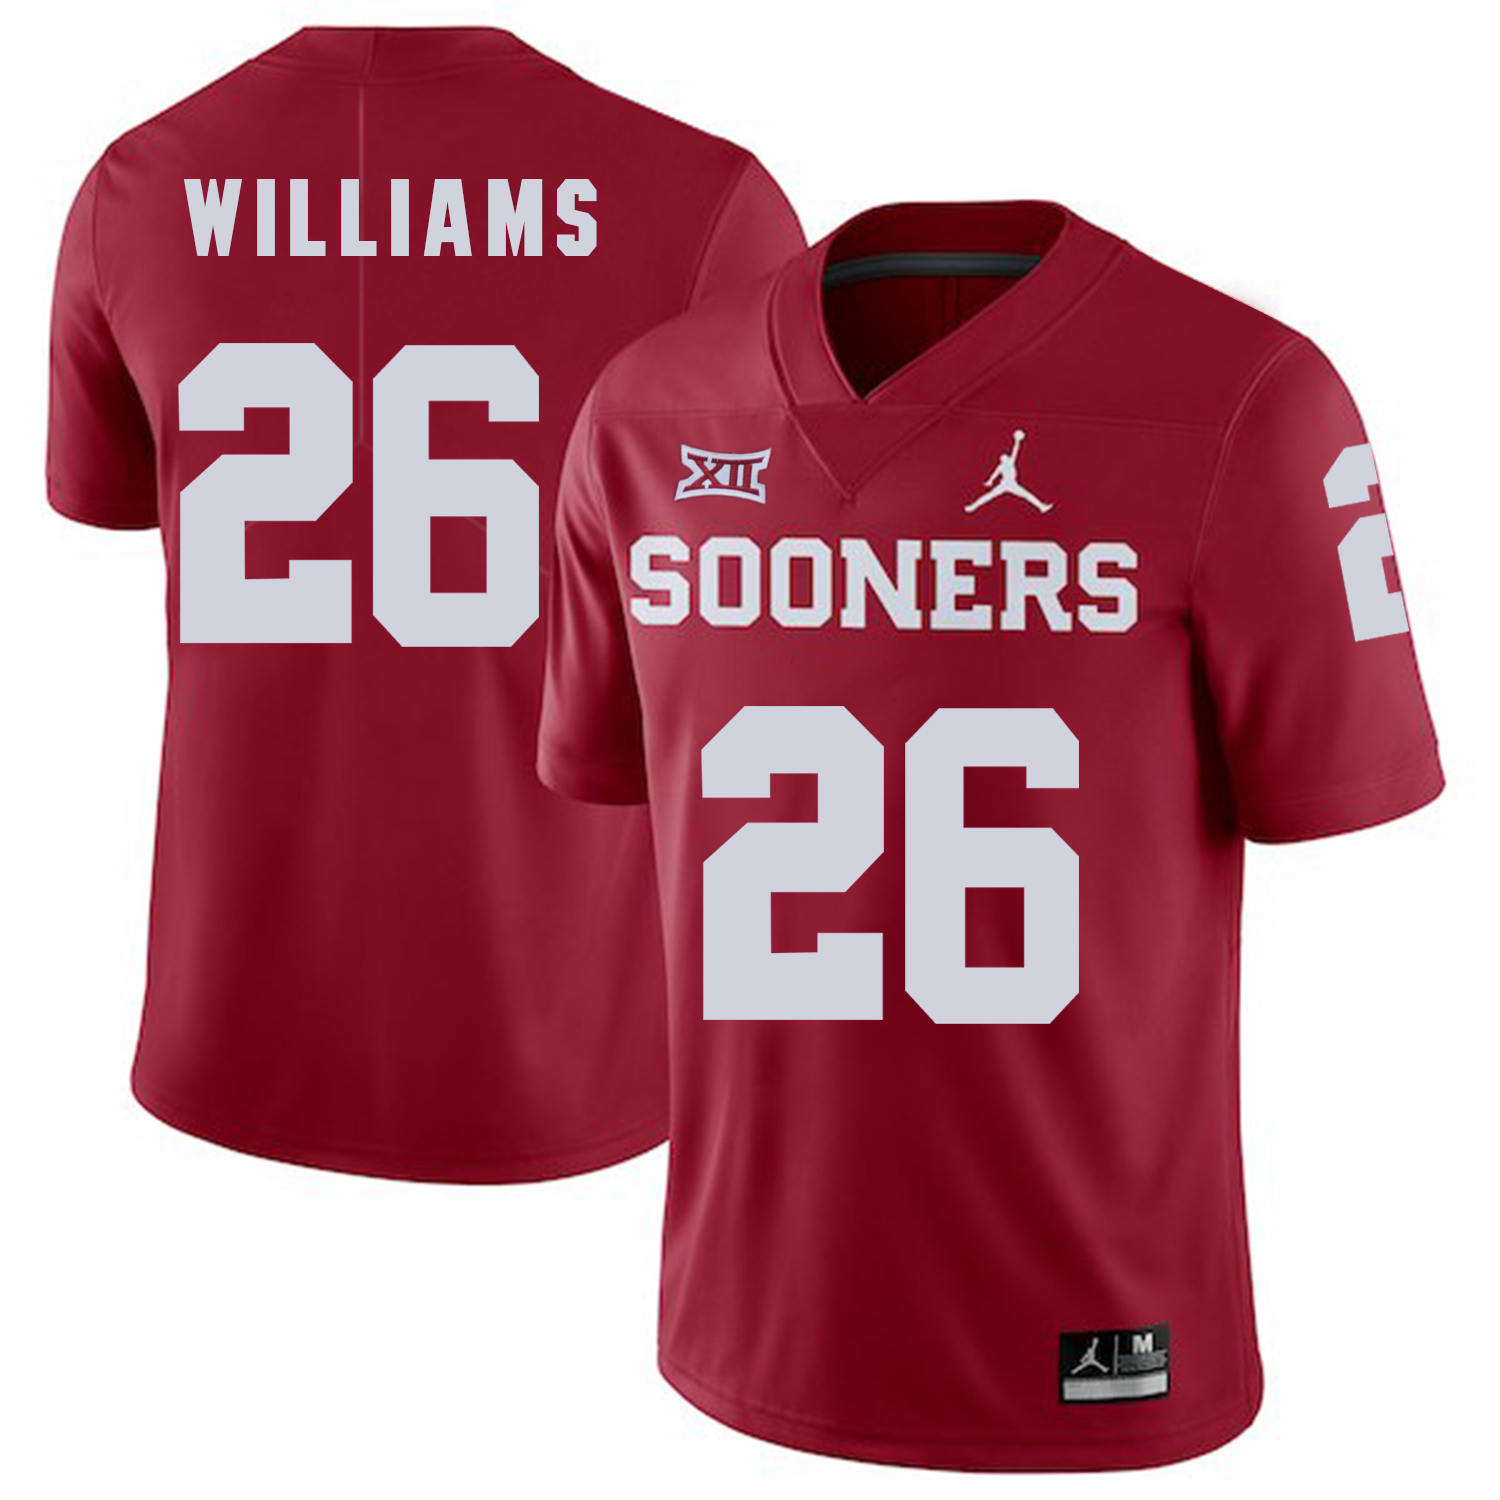 Oklahoma Sooners 26 Damien Williams White College Football Jersey